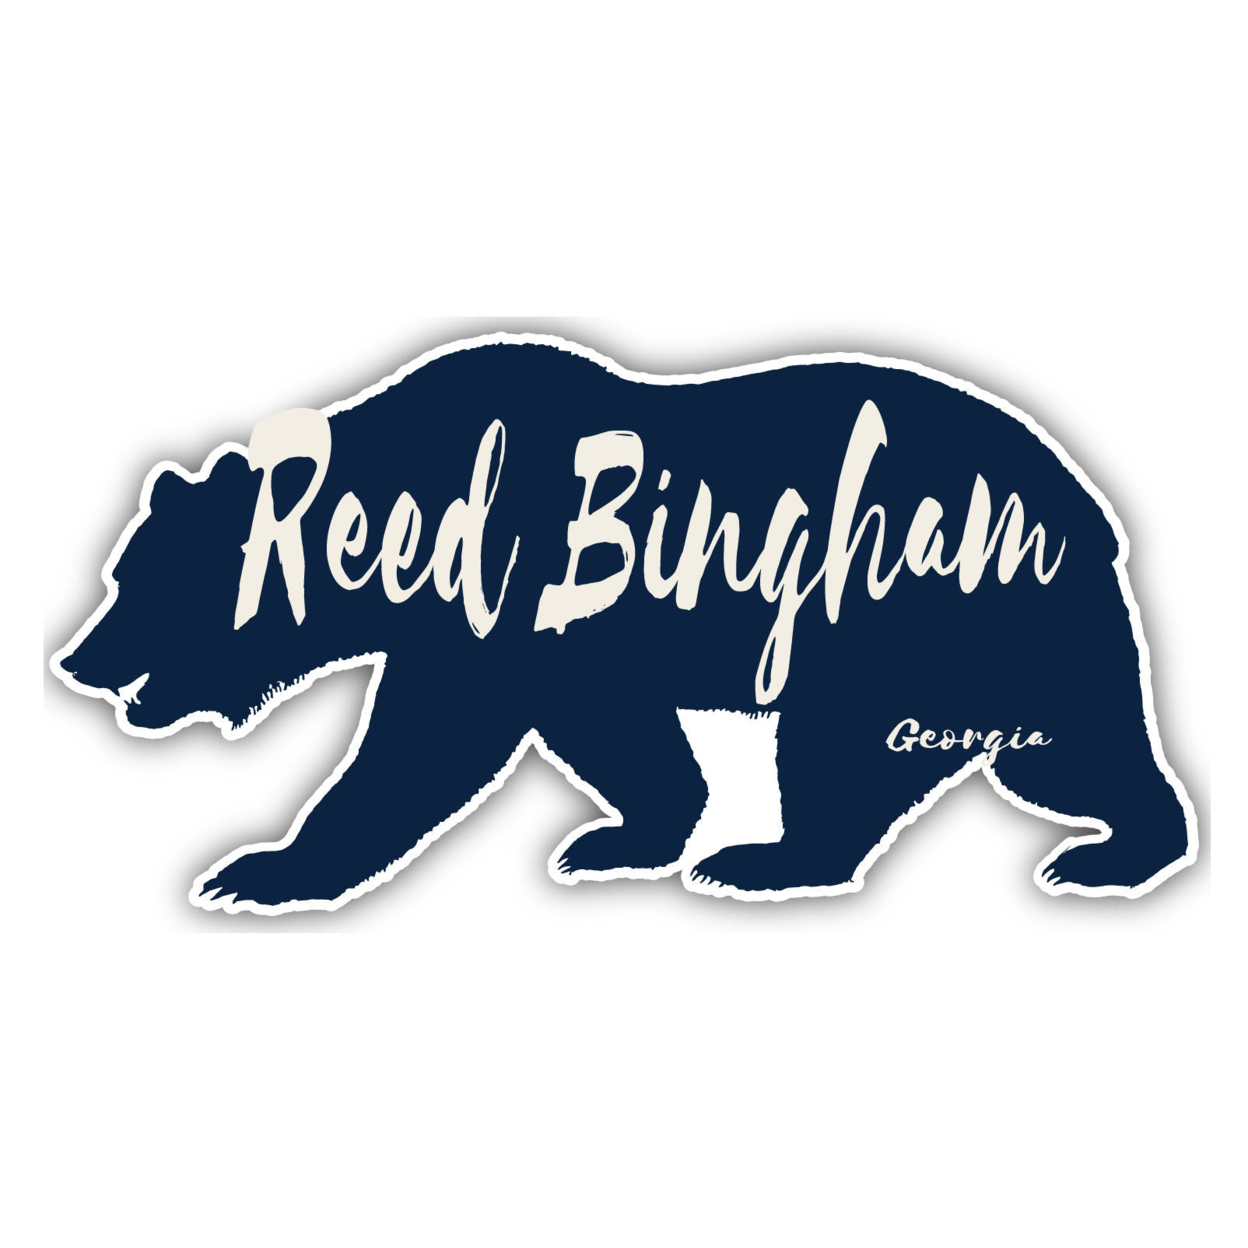 Reed Bingham Georgia Souvenir Decorative Stickers (Choose Theme And Size) - Single Unit, 2-Inch, Tent